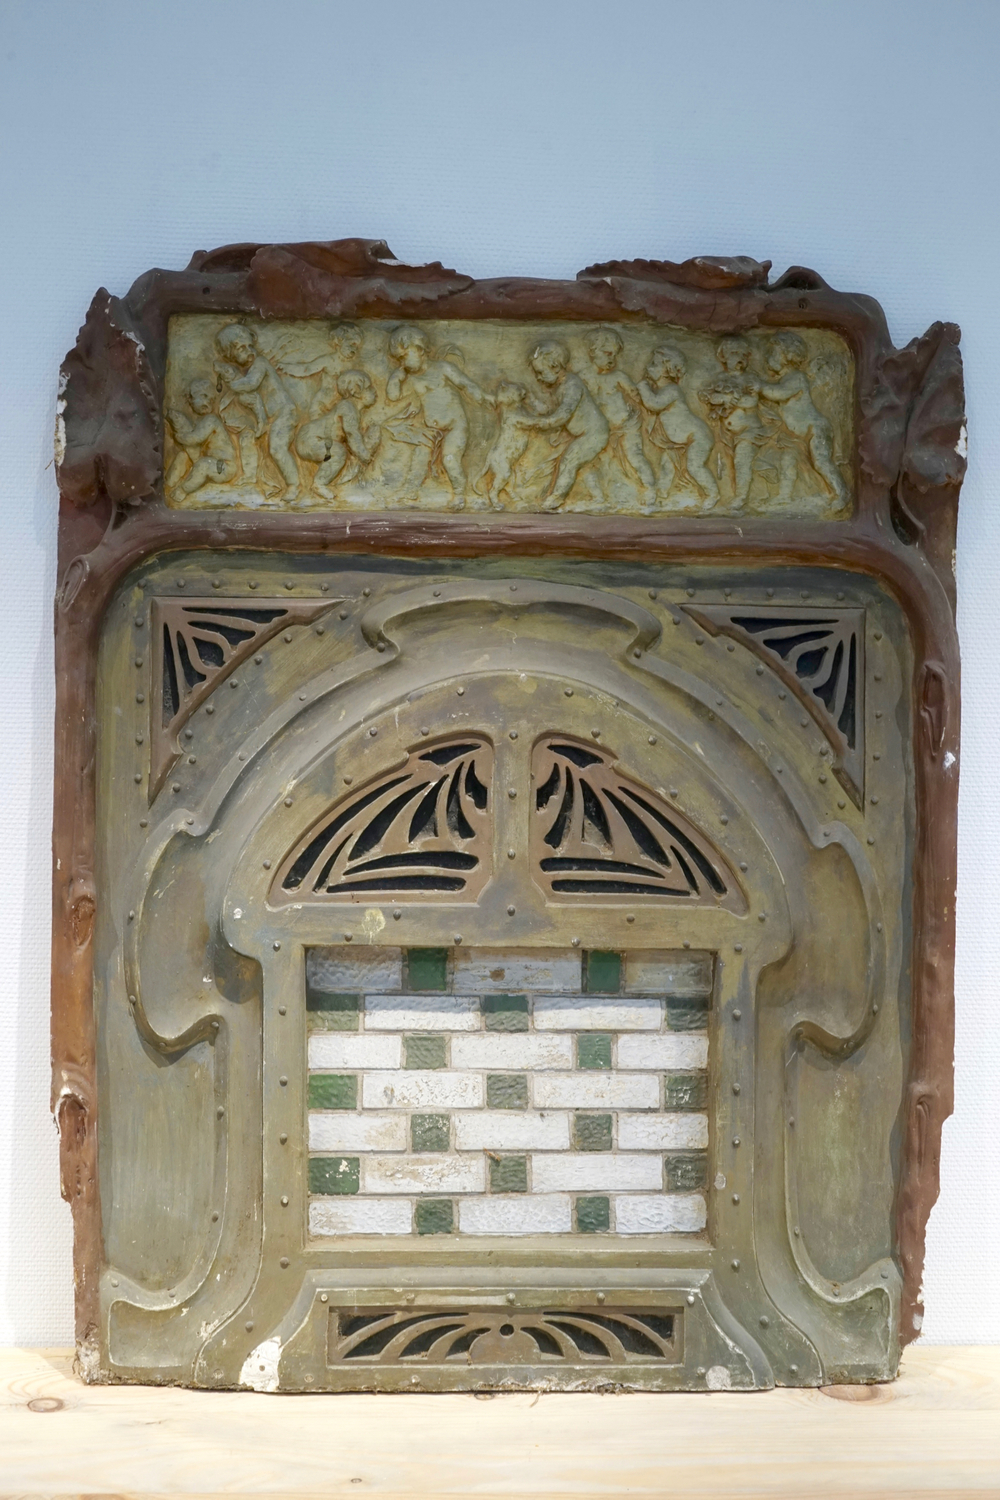 A plaster cast of an art nouveau fireplace front with cherubs, 19/20th C., Bruges